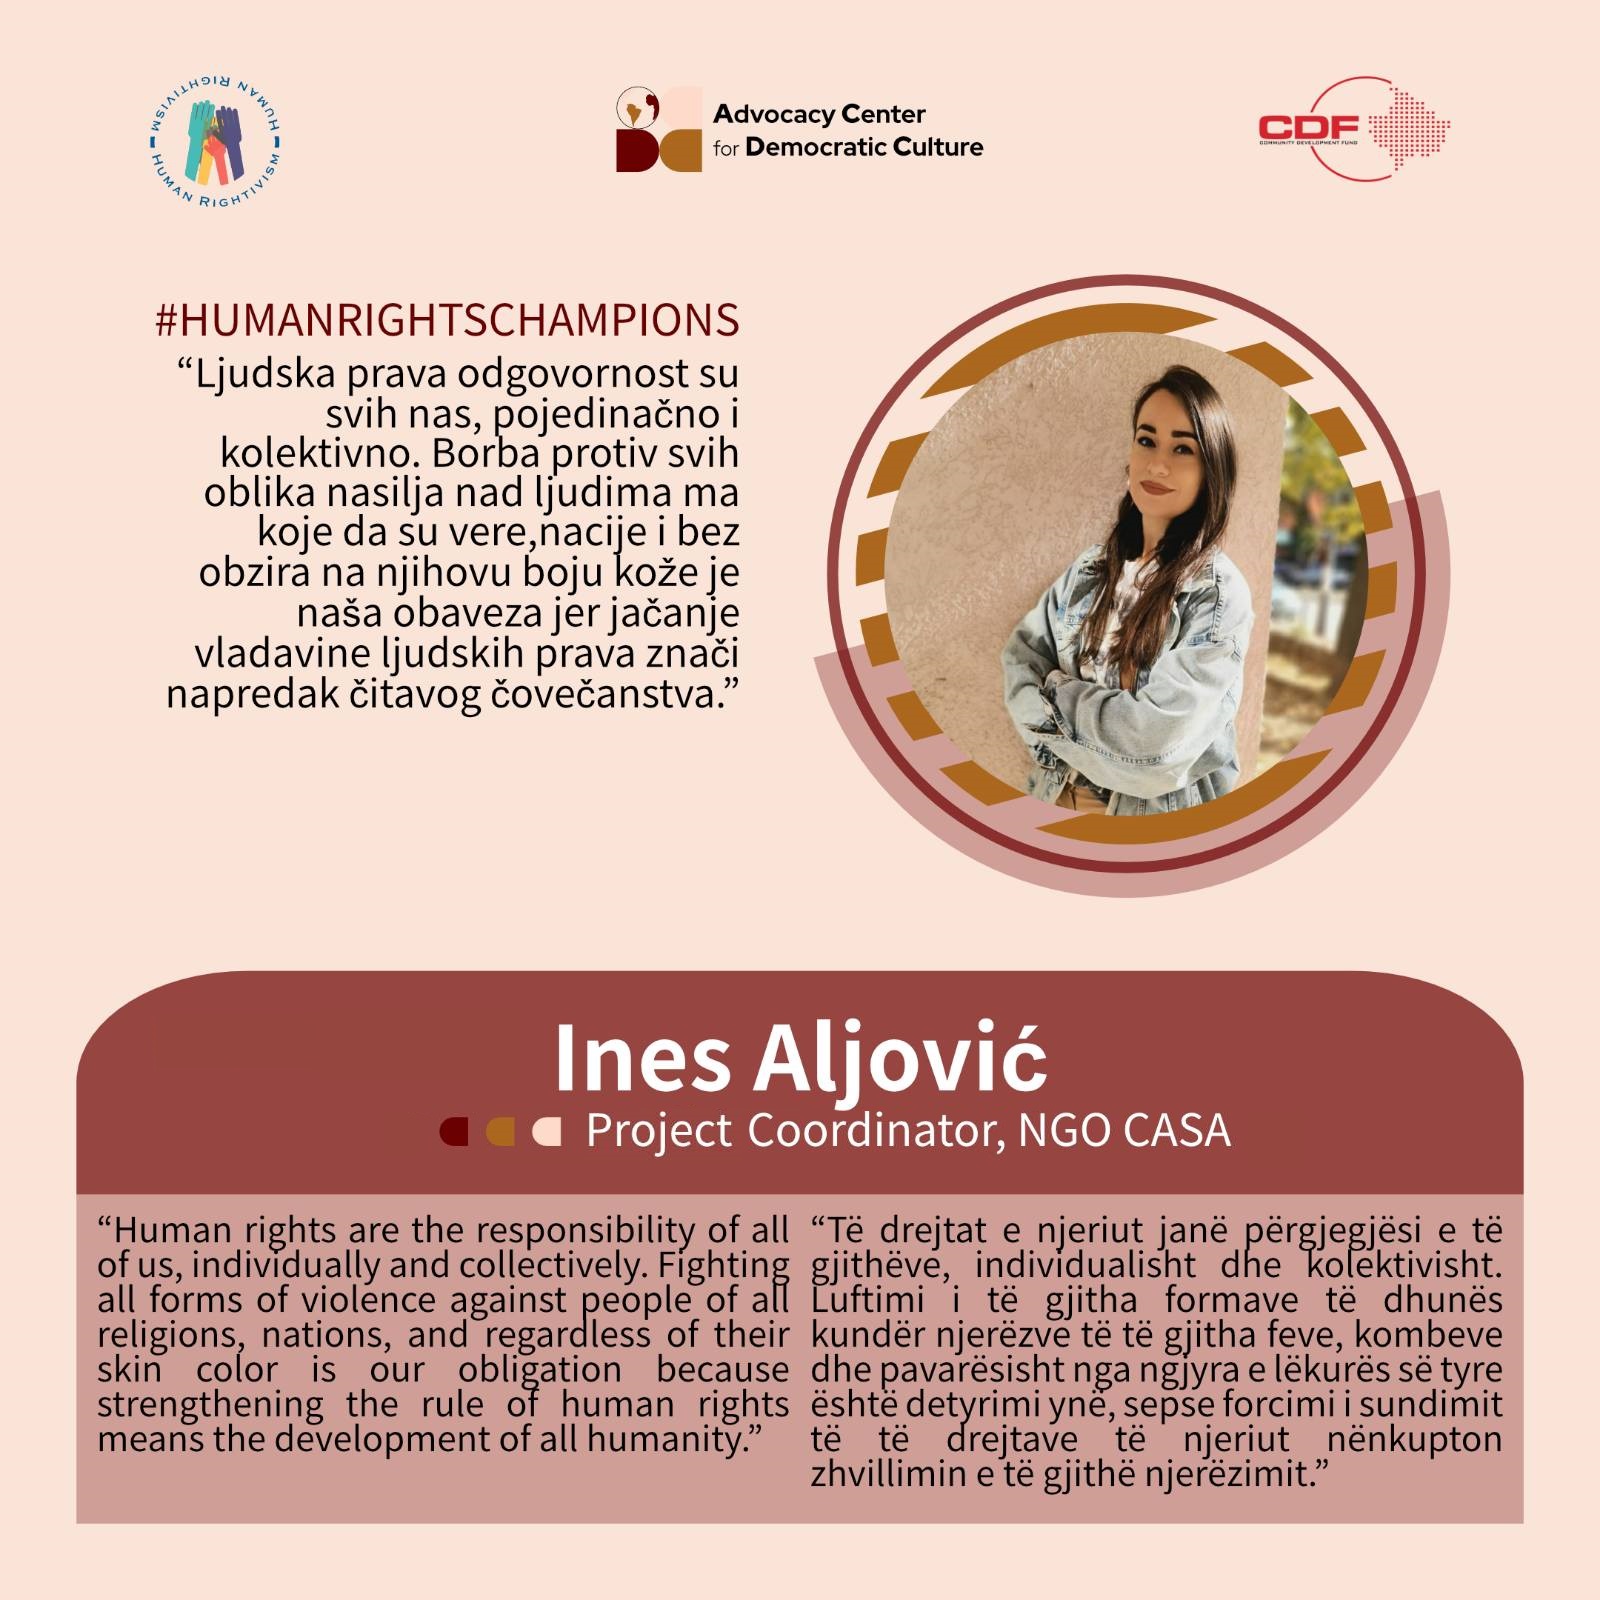 kampanja-promocije-ljudskih-prava-humanrightschampions-ines-aljovic